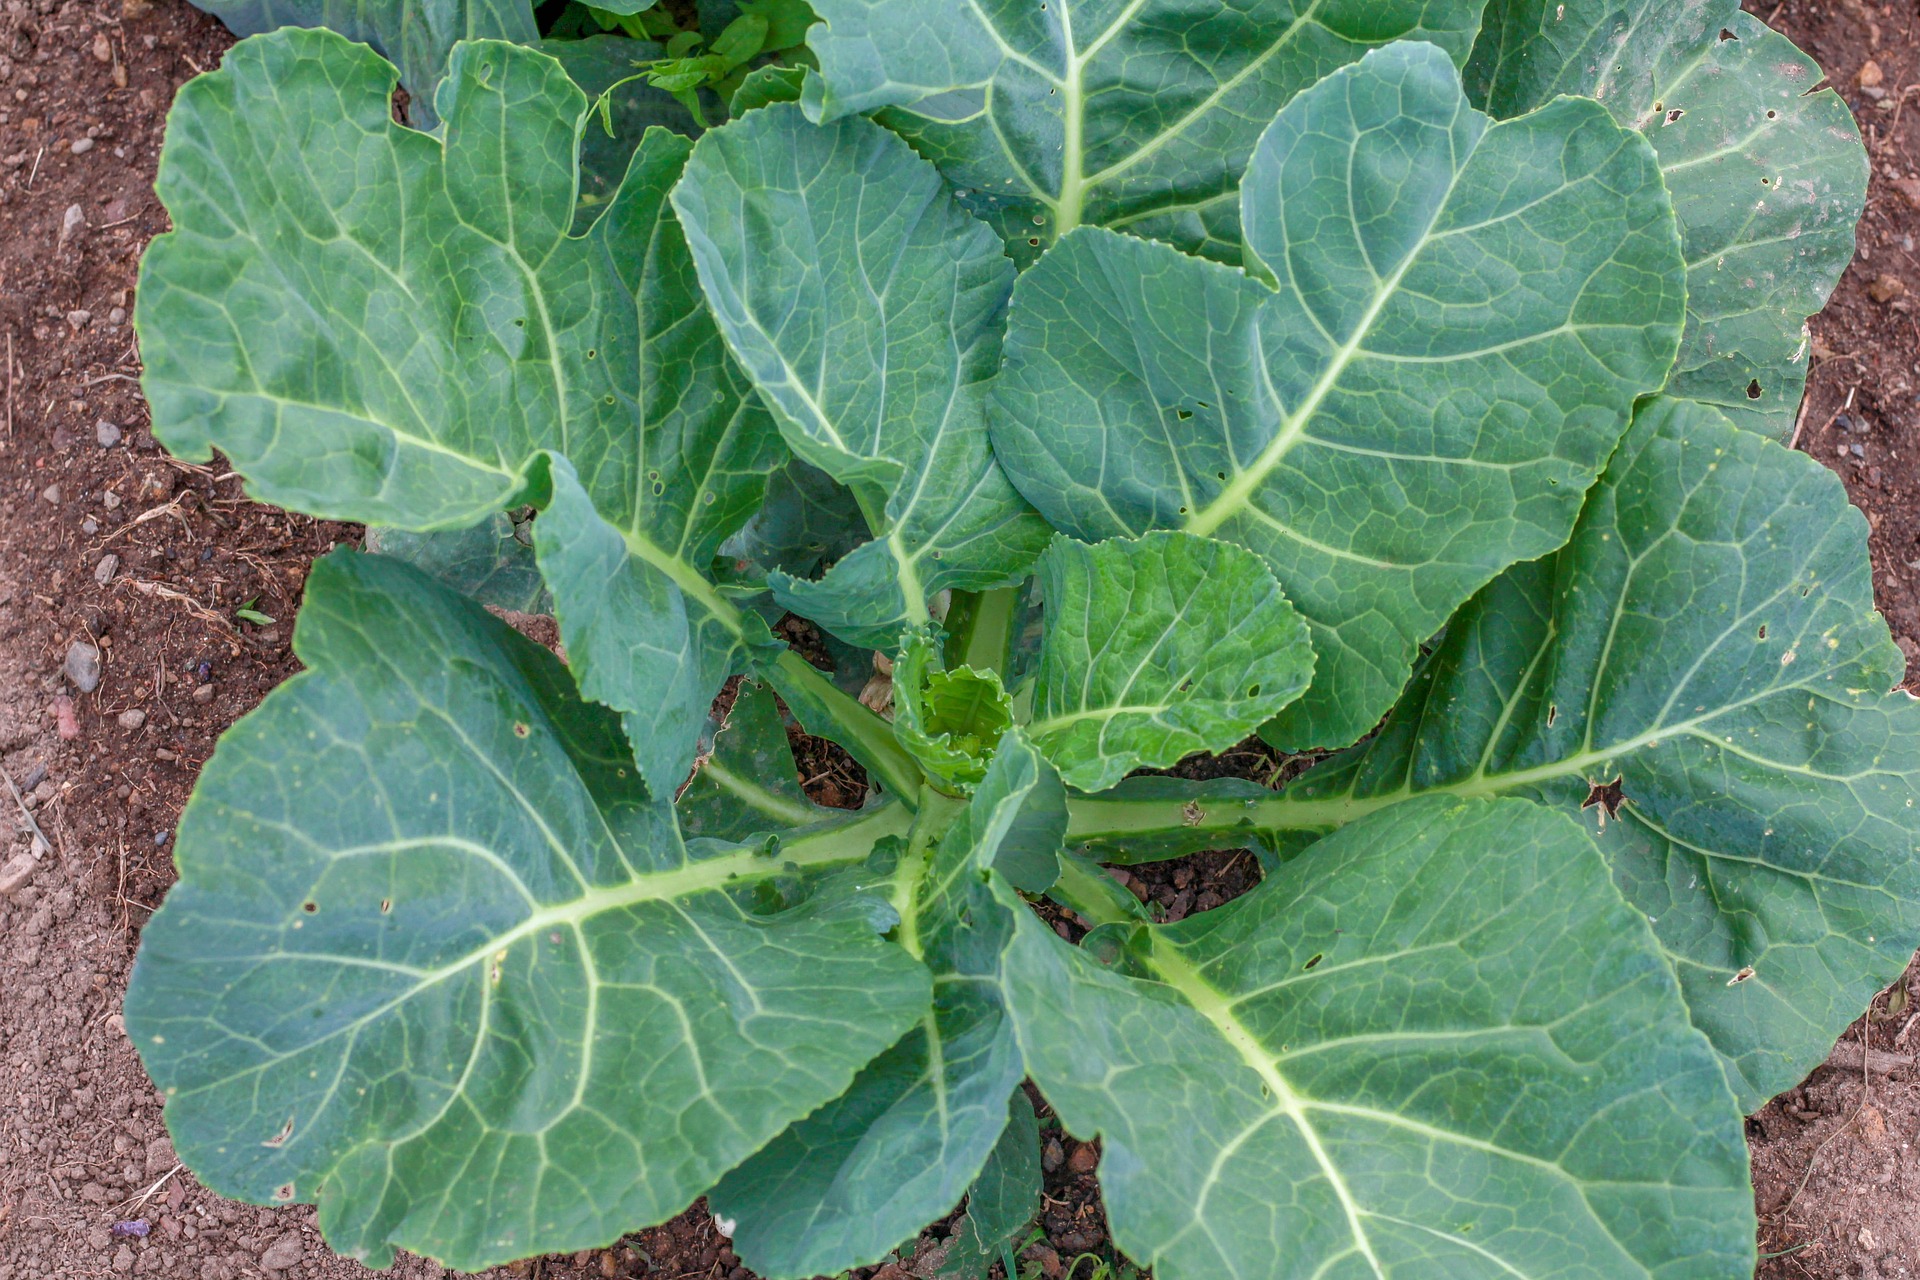 Champion Collard Green Seeds (Organic)